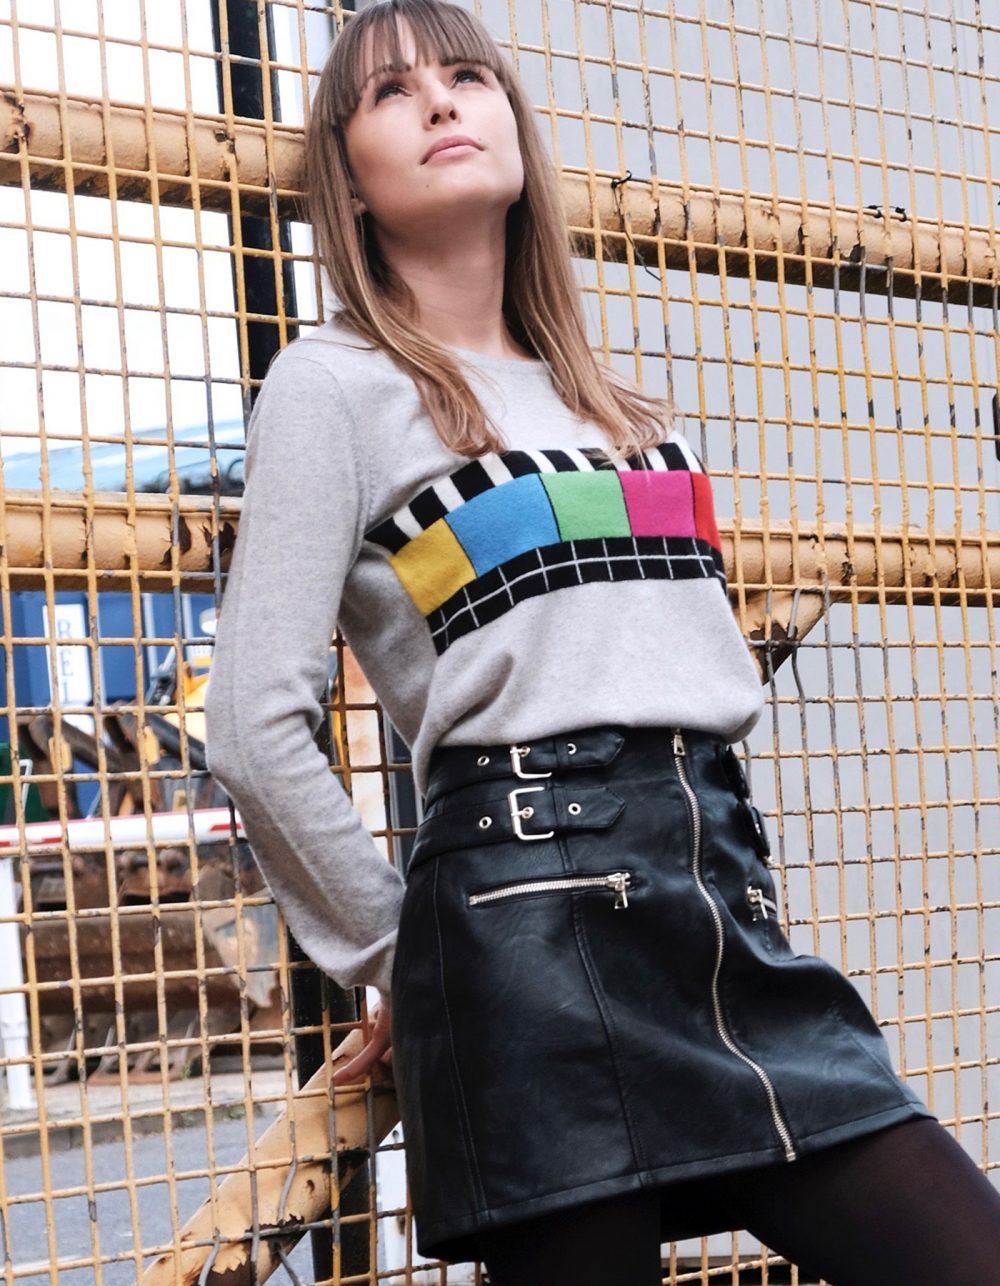 A model wearing the Test Bild cashmere jumper by Malin Darlin.